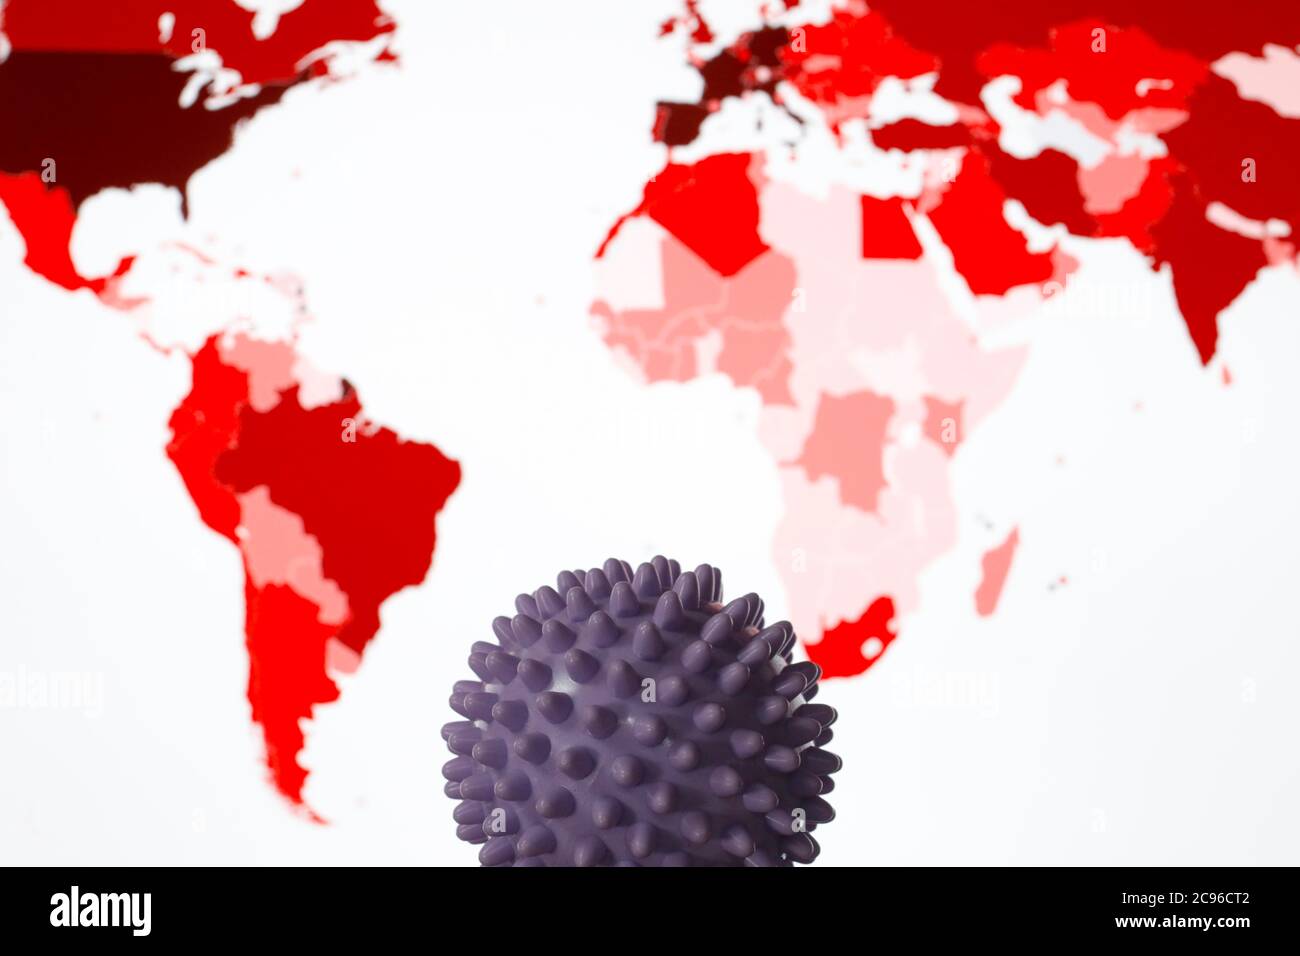 Coronavirus epidemic (COVID-19). Website. World map showing the global pandemic. France. Stock Photo